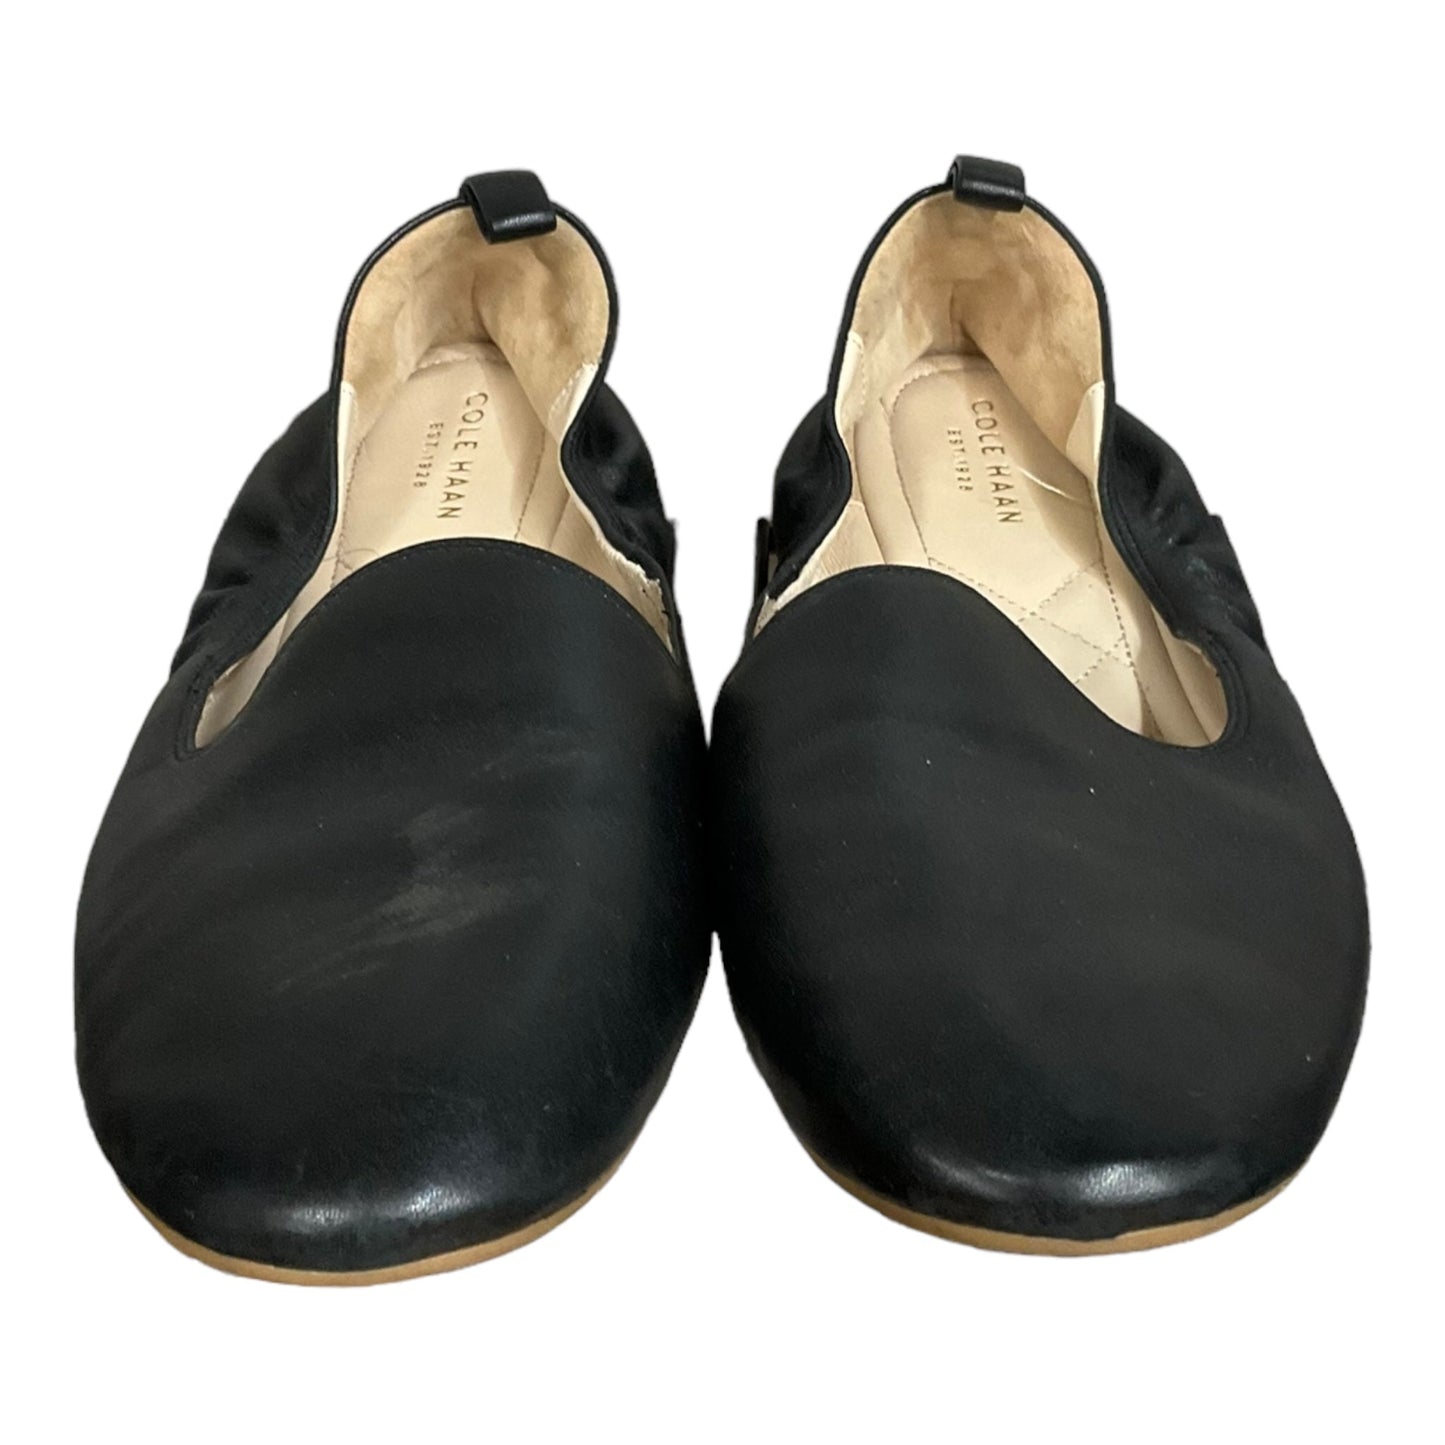 Black Shoes Flats Cole-haan, Size 9